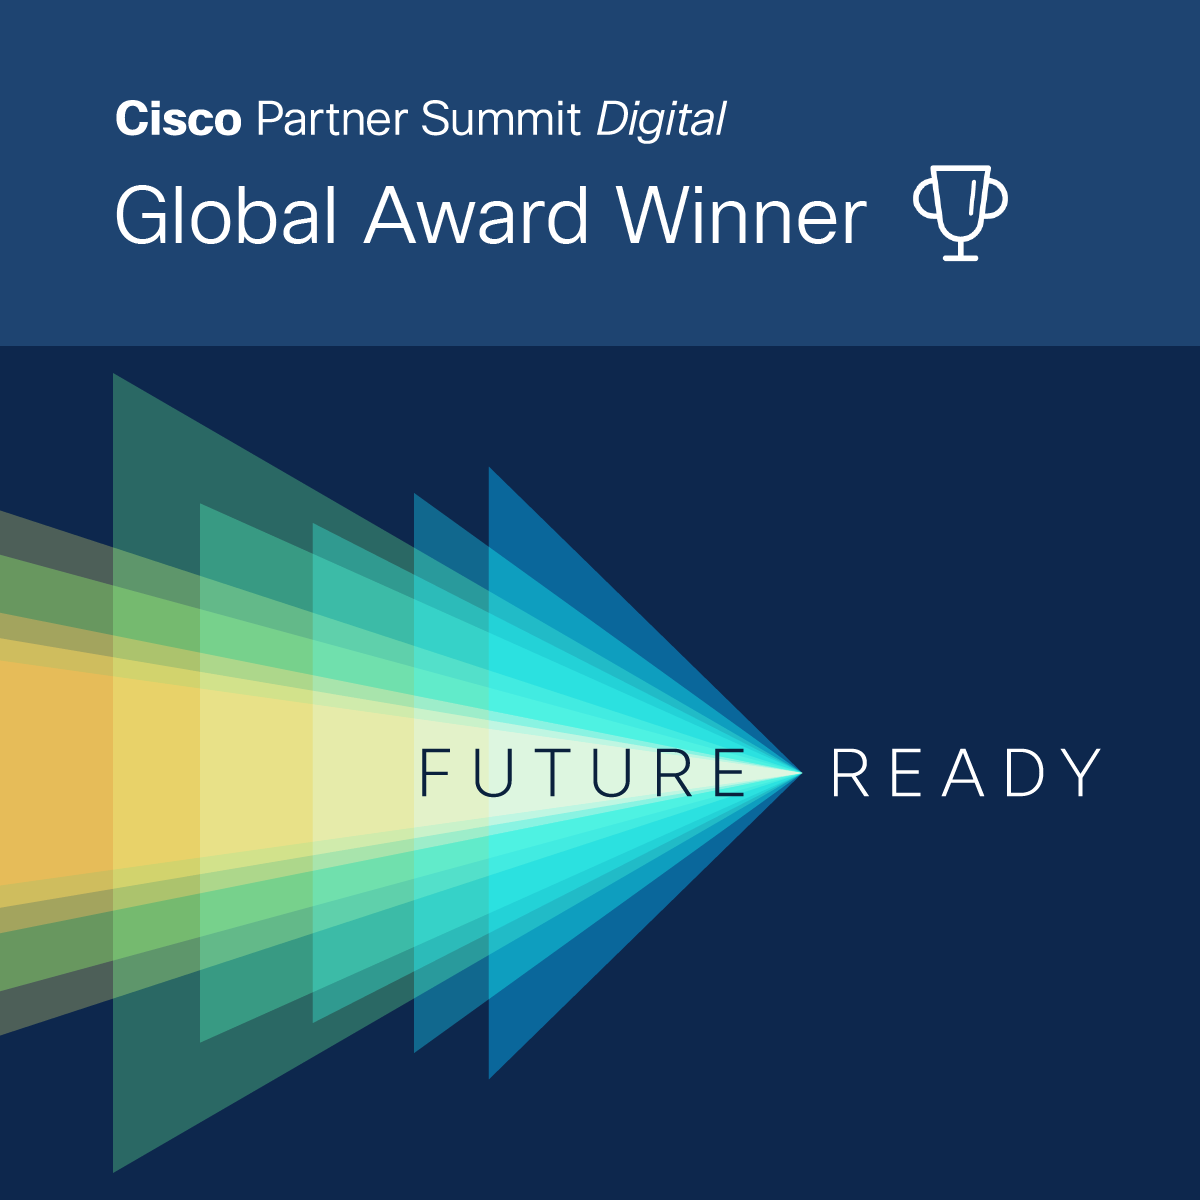 Deutsche Telekom honoured with Cisco Partner Summit Digital Global